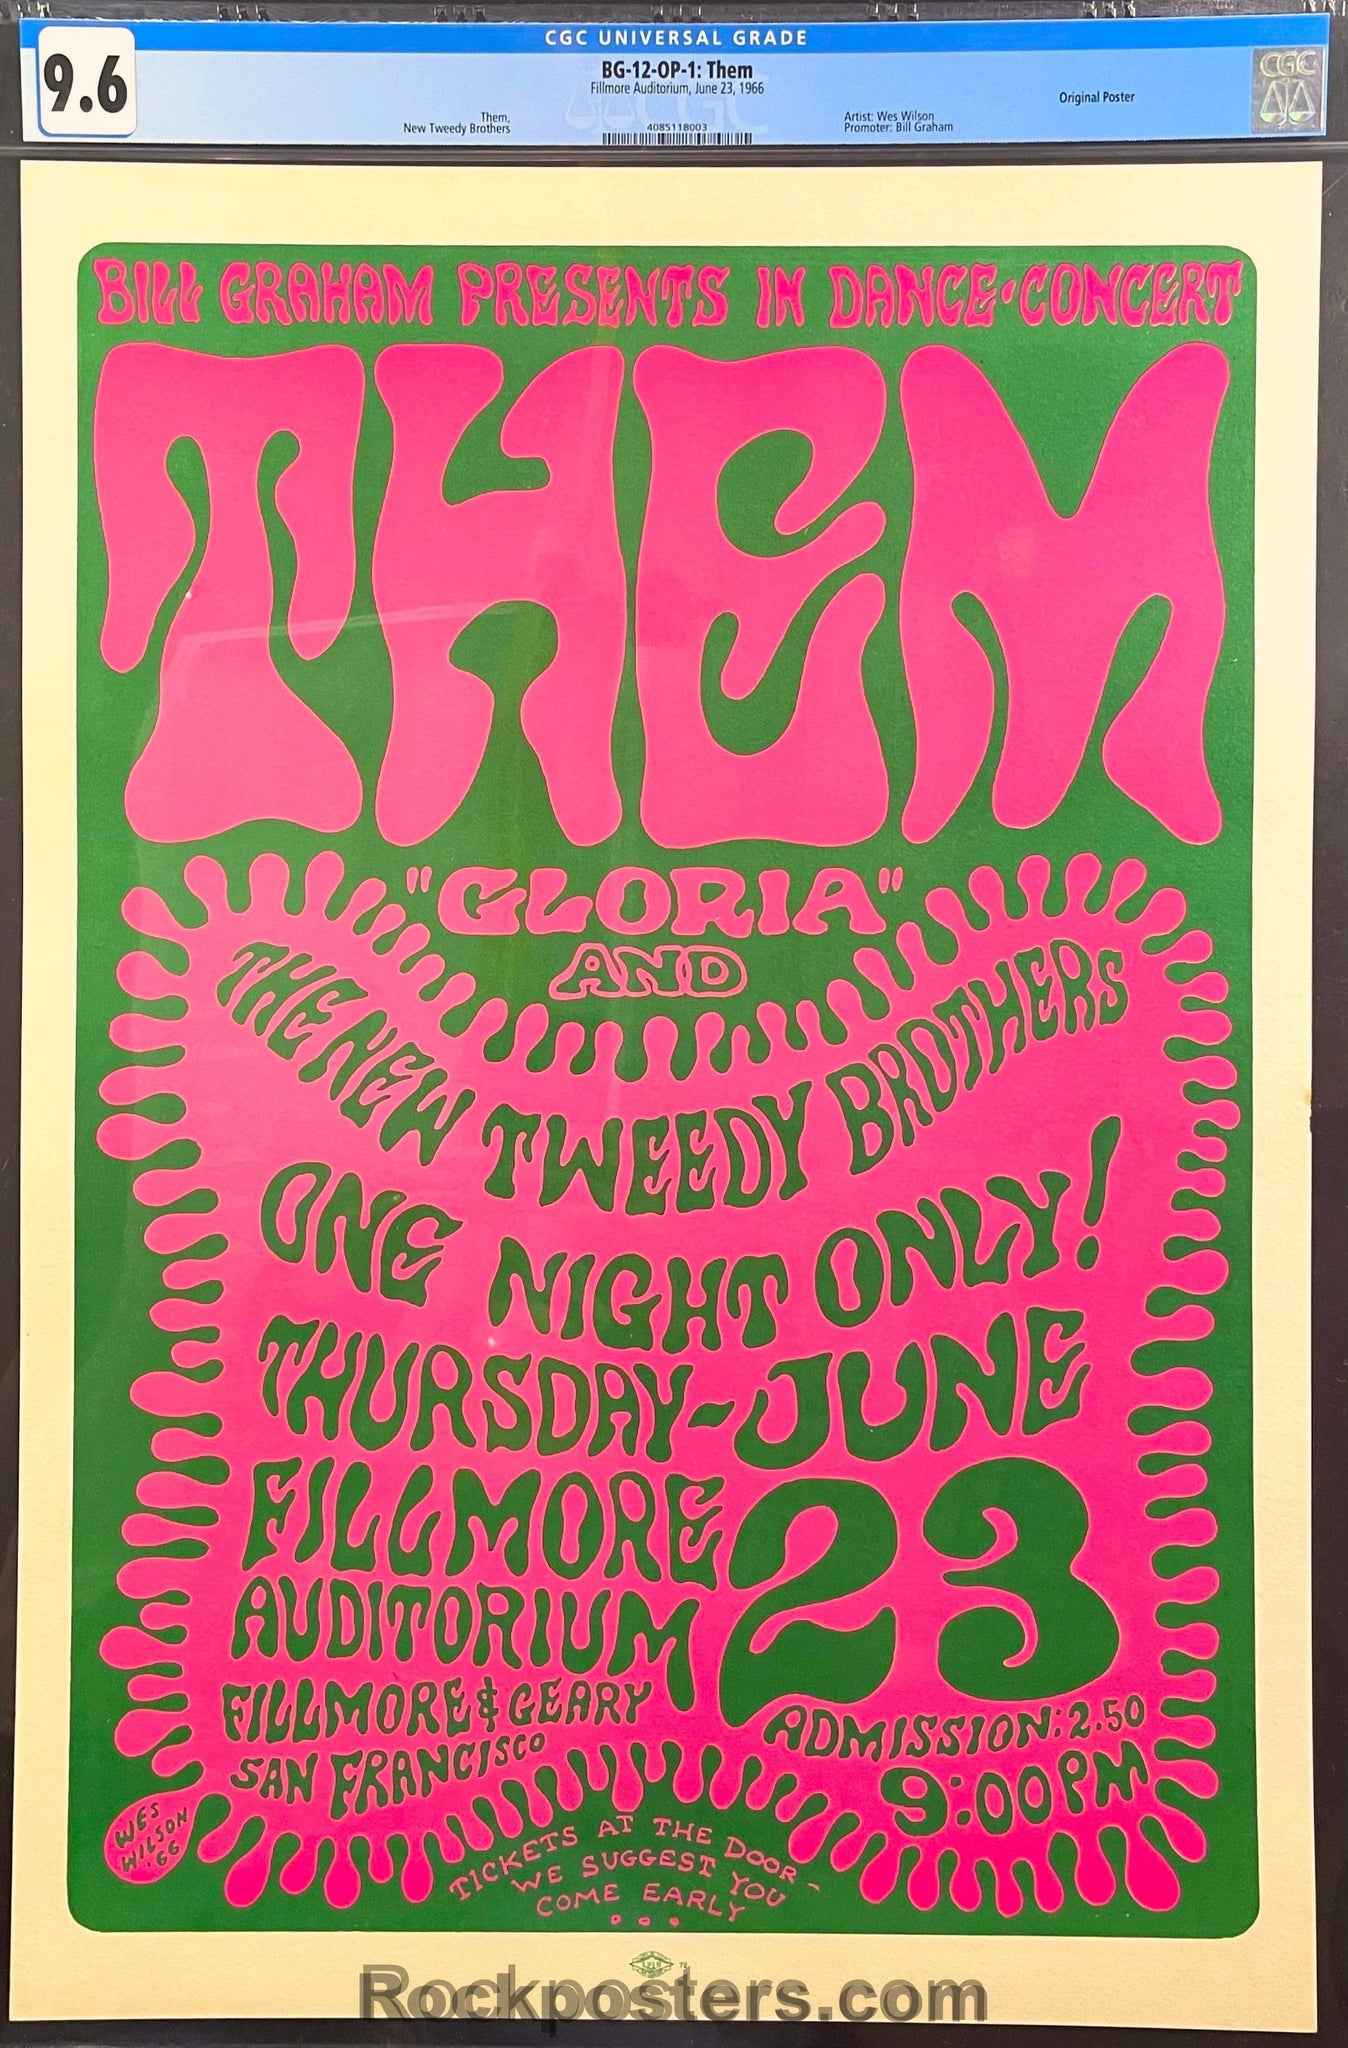 BG-12 - Them Van Morrison - Wes Wilson - 1966 Poster - Fillmore Auditorium - CGC Graded 9.6